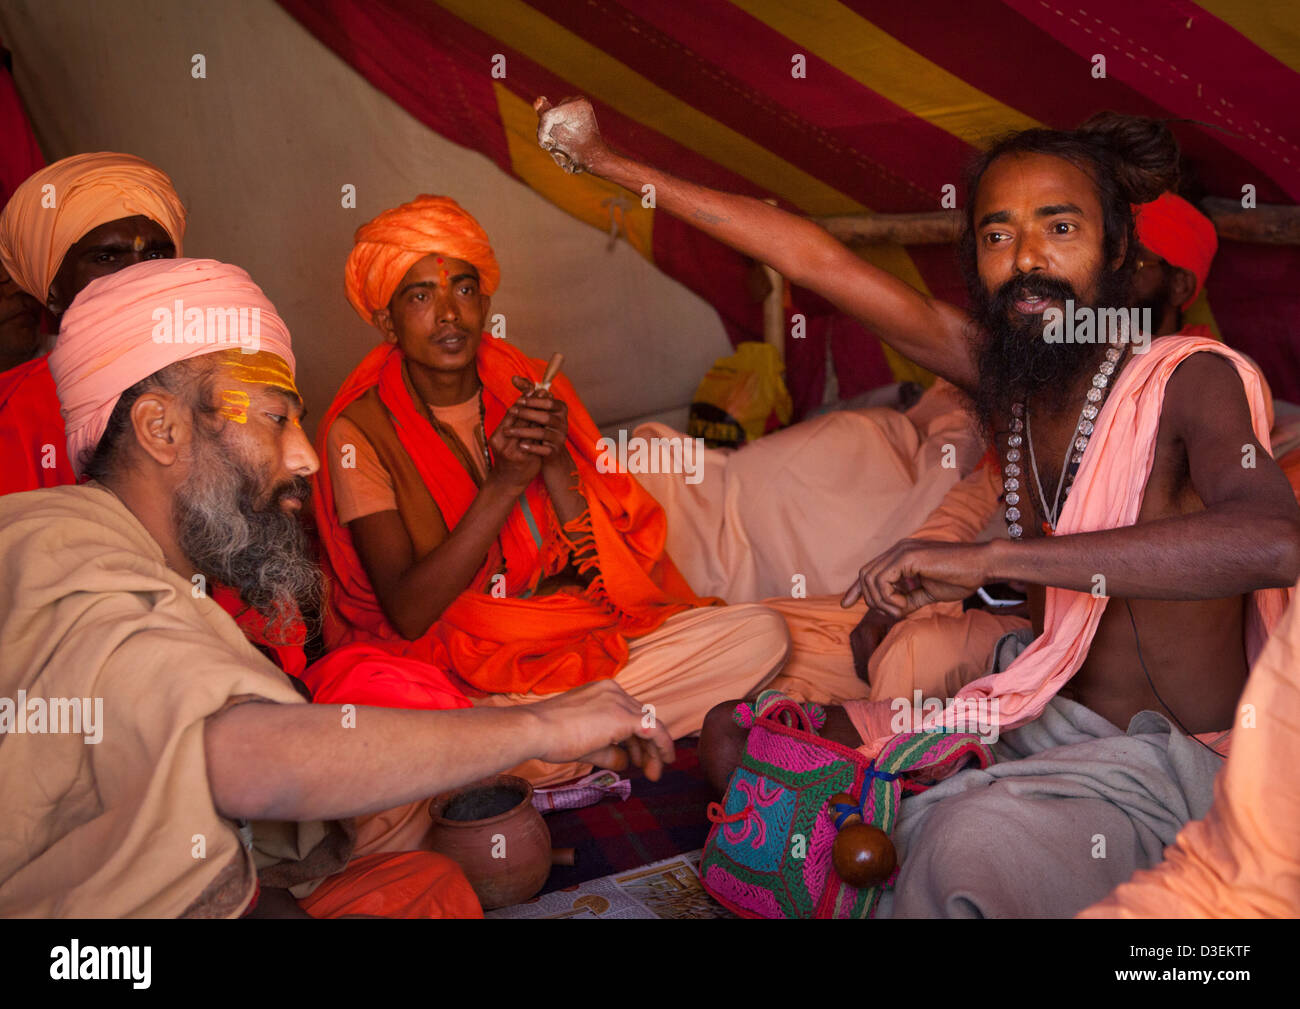 Naga Sadhu Holding His Arm Up, Maha Kumbh Mela, Allahabad, India Stock Photo